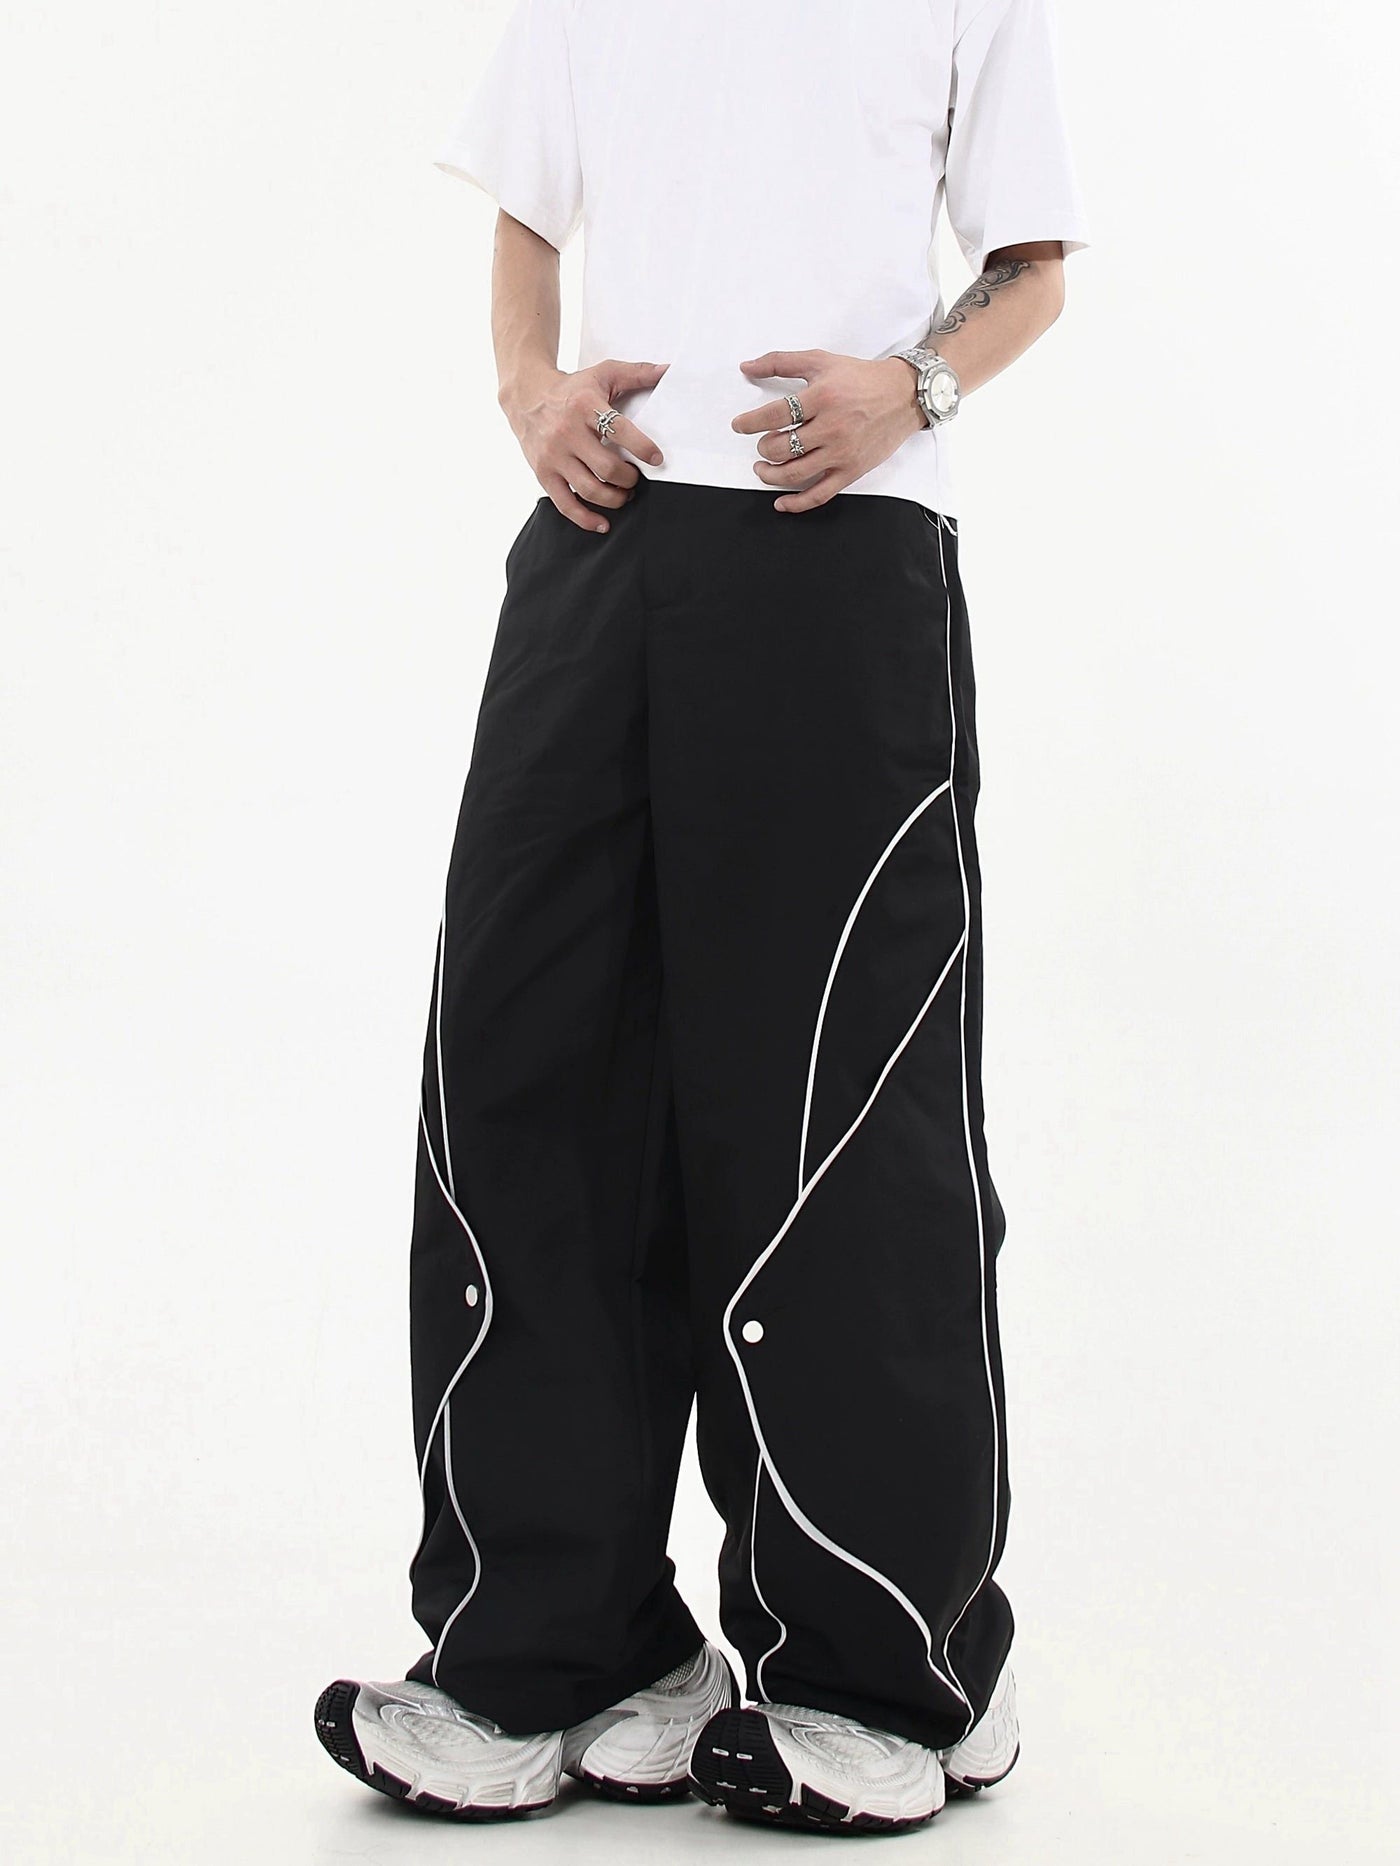 Spliced Stripes Sports Pants Korean Street Fashion Pants By Blacklists Shop Online at OH Vault